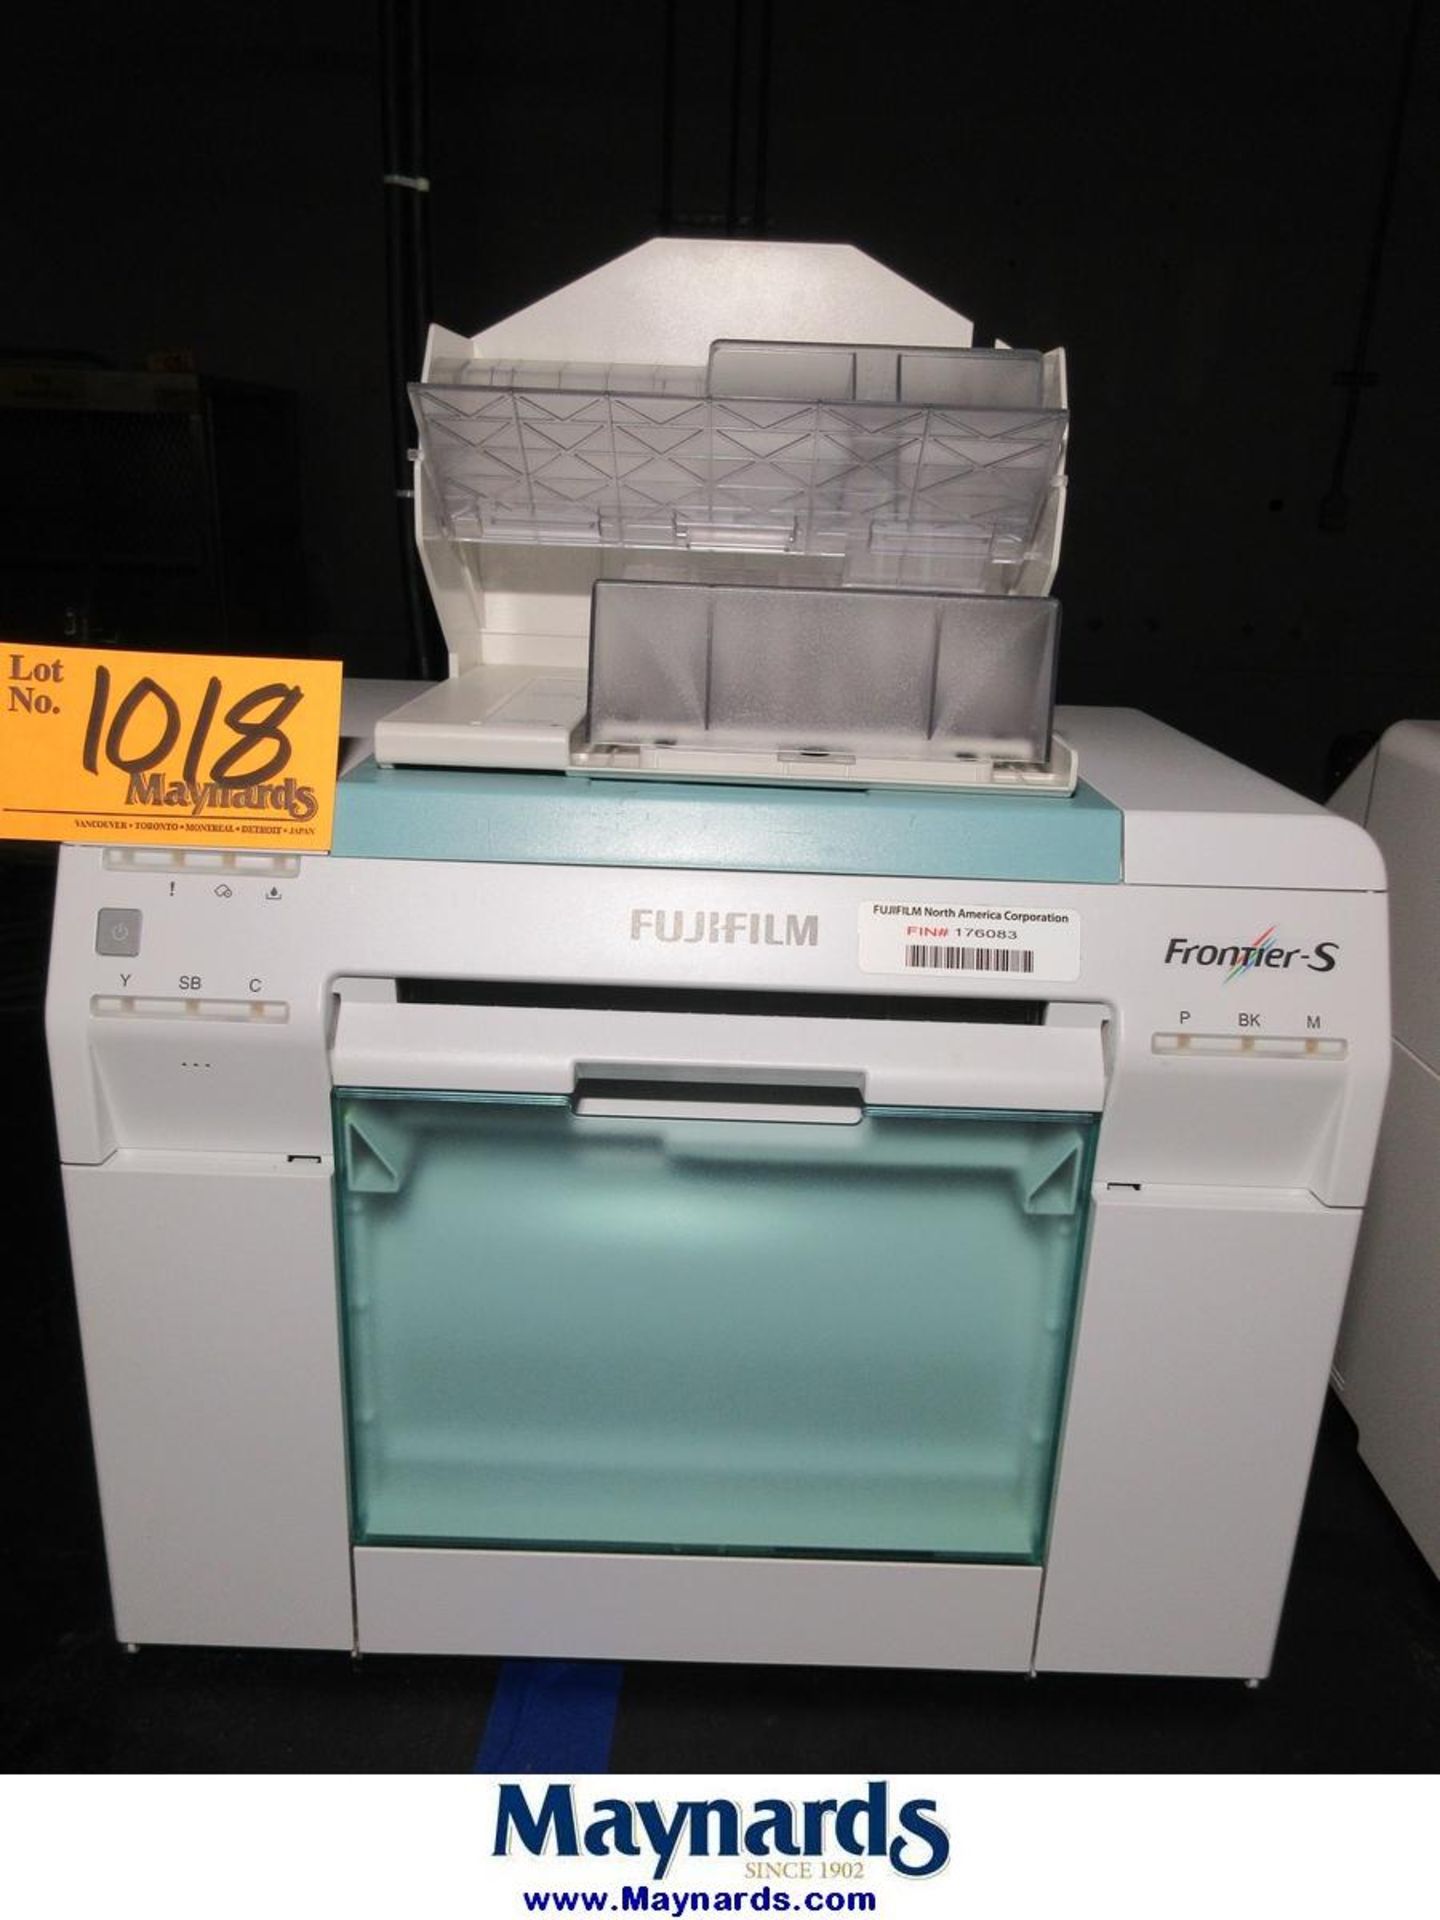 Fujifilm Frontier-S DX100 Printer - Image 2 of 4